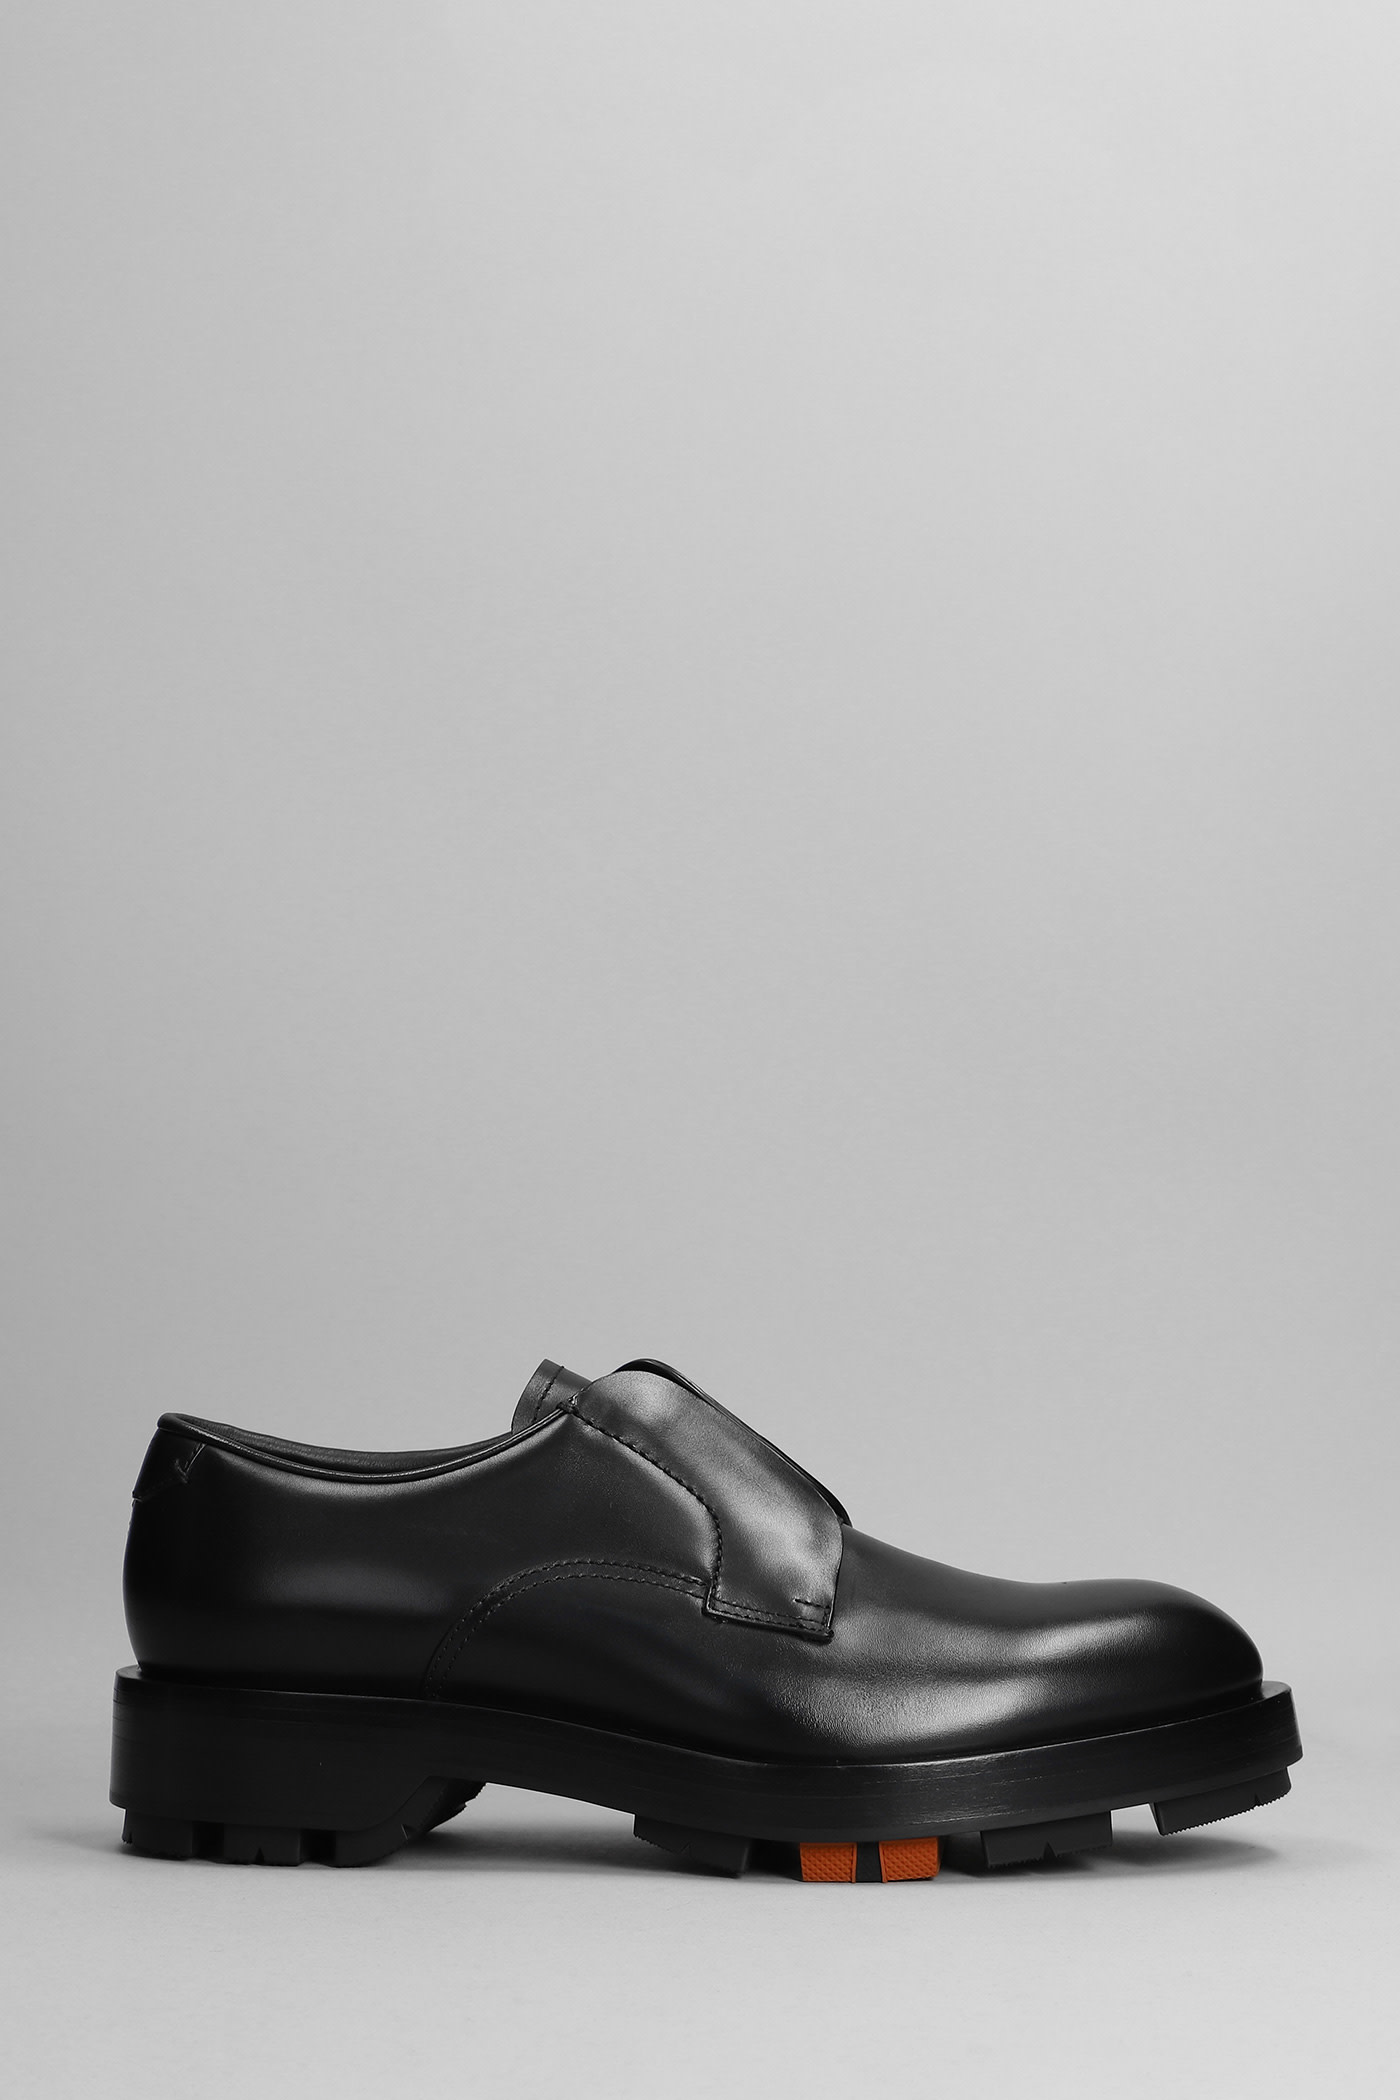 Ermenegildo Zegna Lace Up Shoes In Black Leather